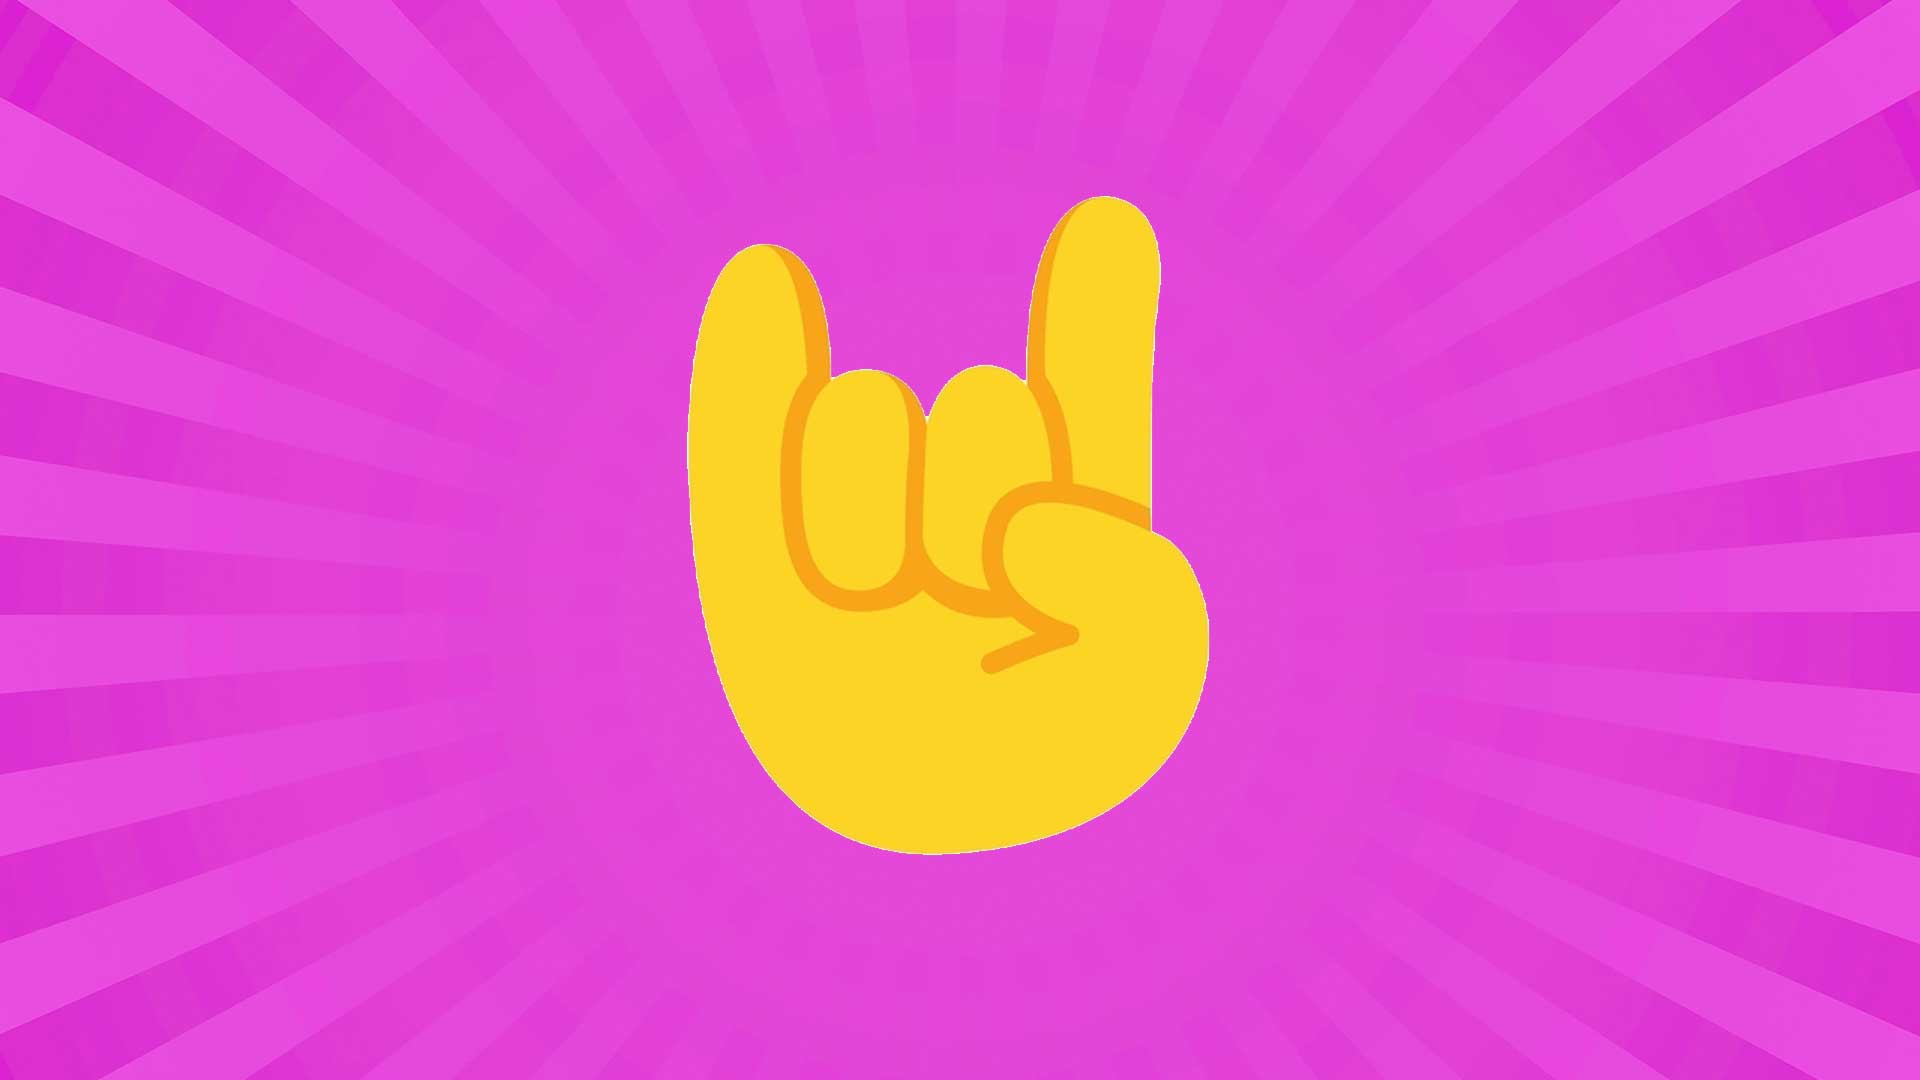 Heavy metal hand emoji